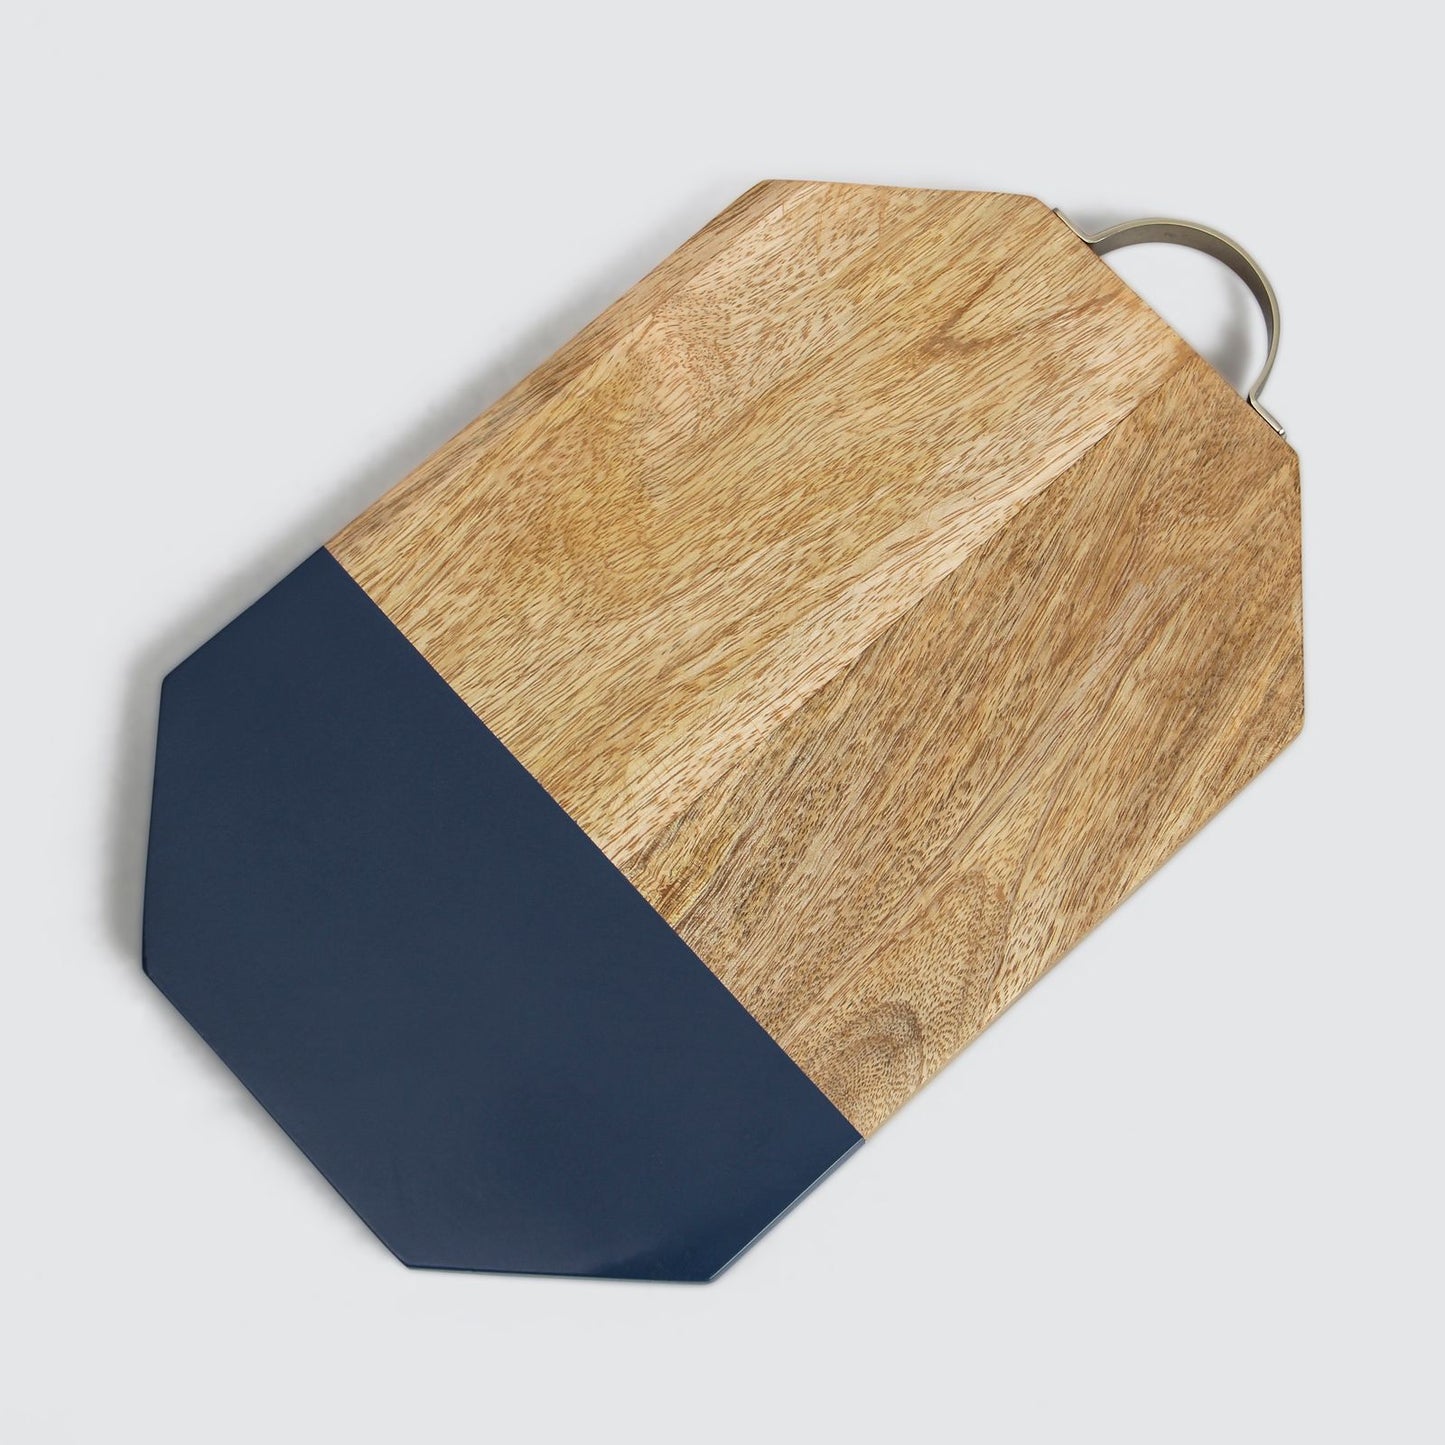 Mango Wood & Iron Serving Board - Blue